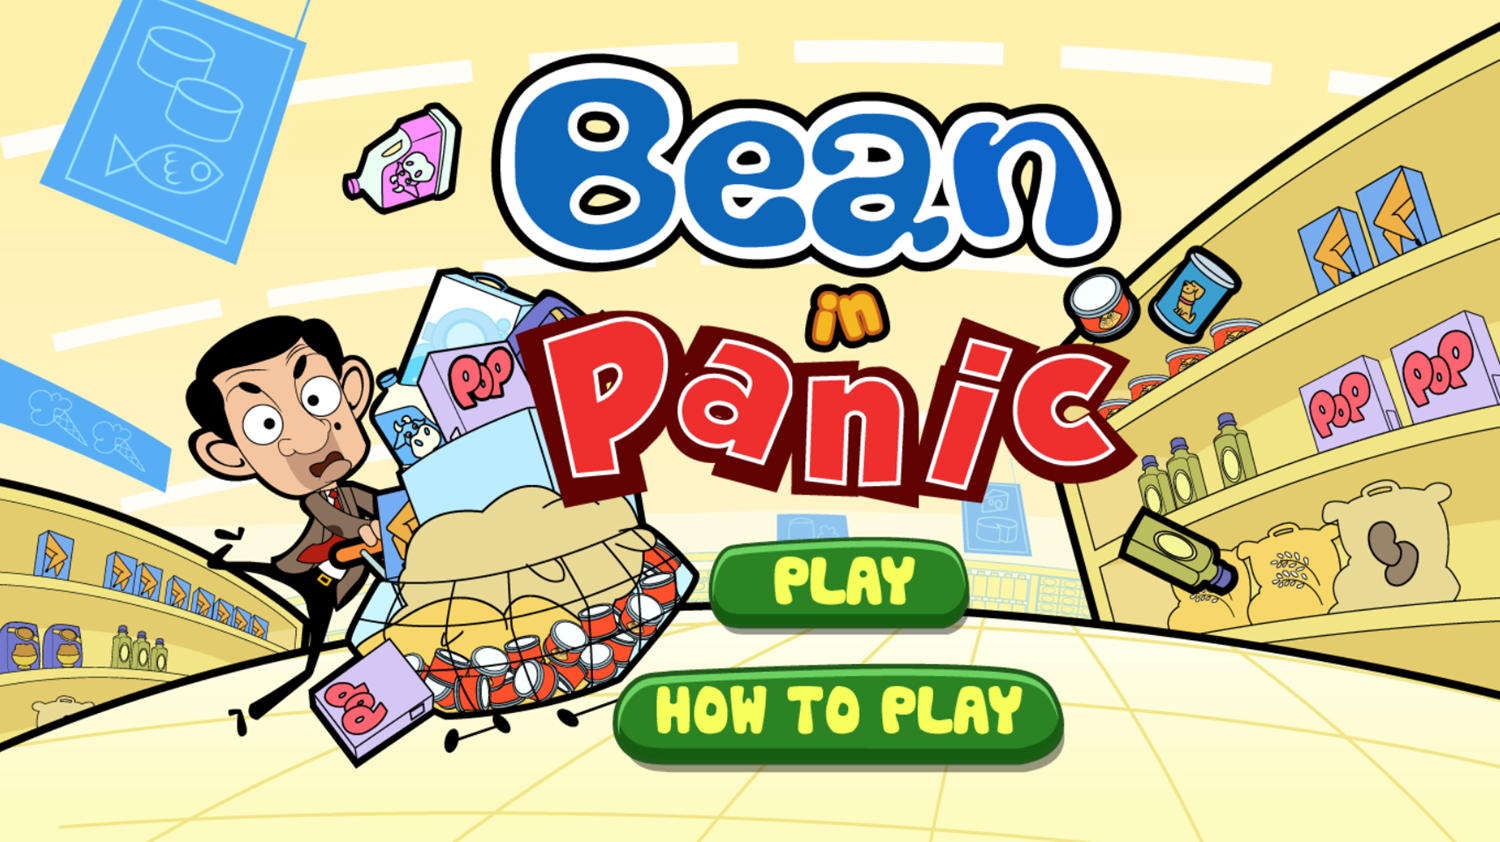 Mr Bean Bean in Panic Game Welcome Screen Screenshot.